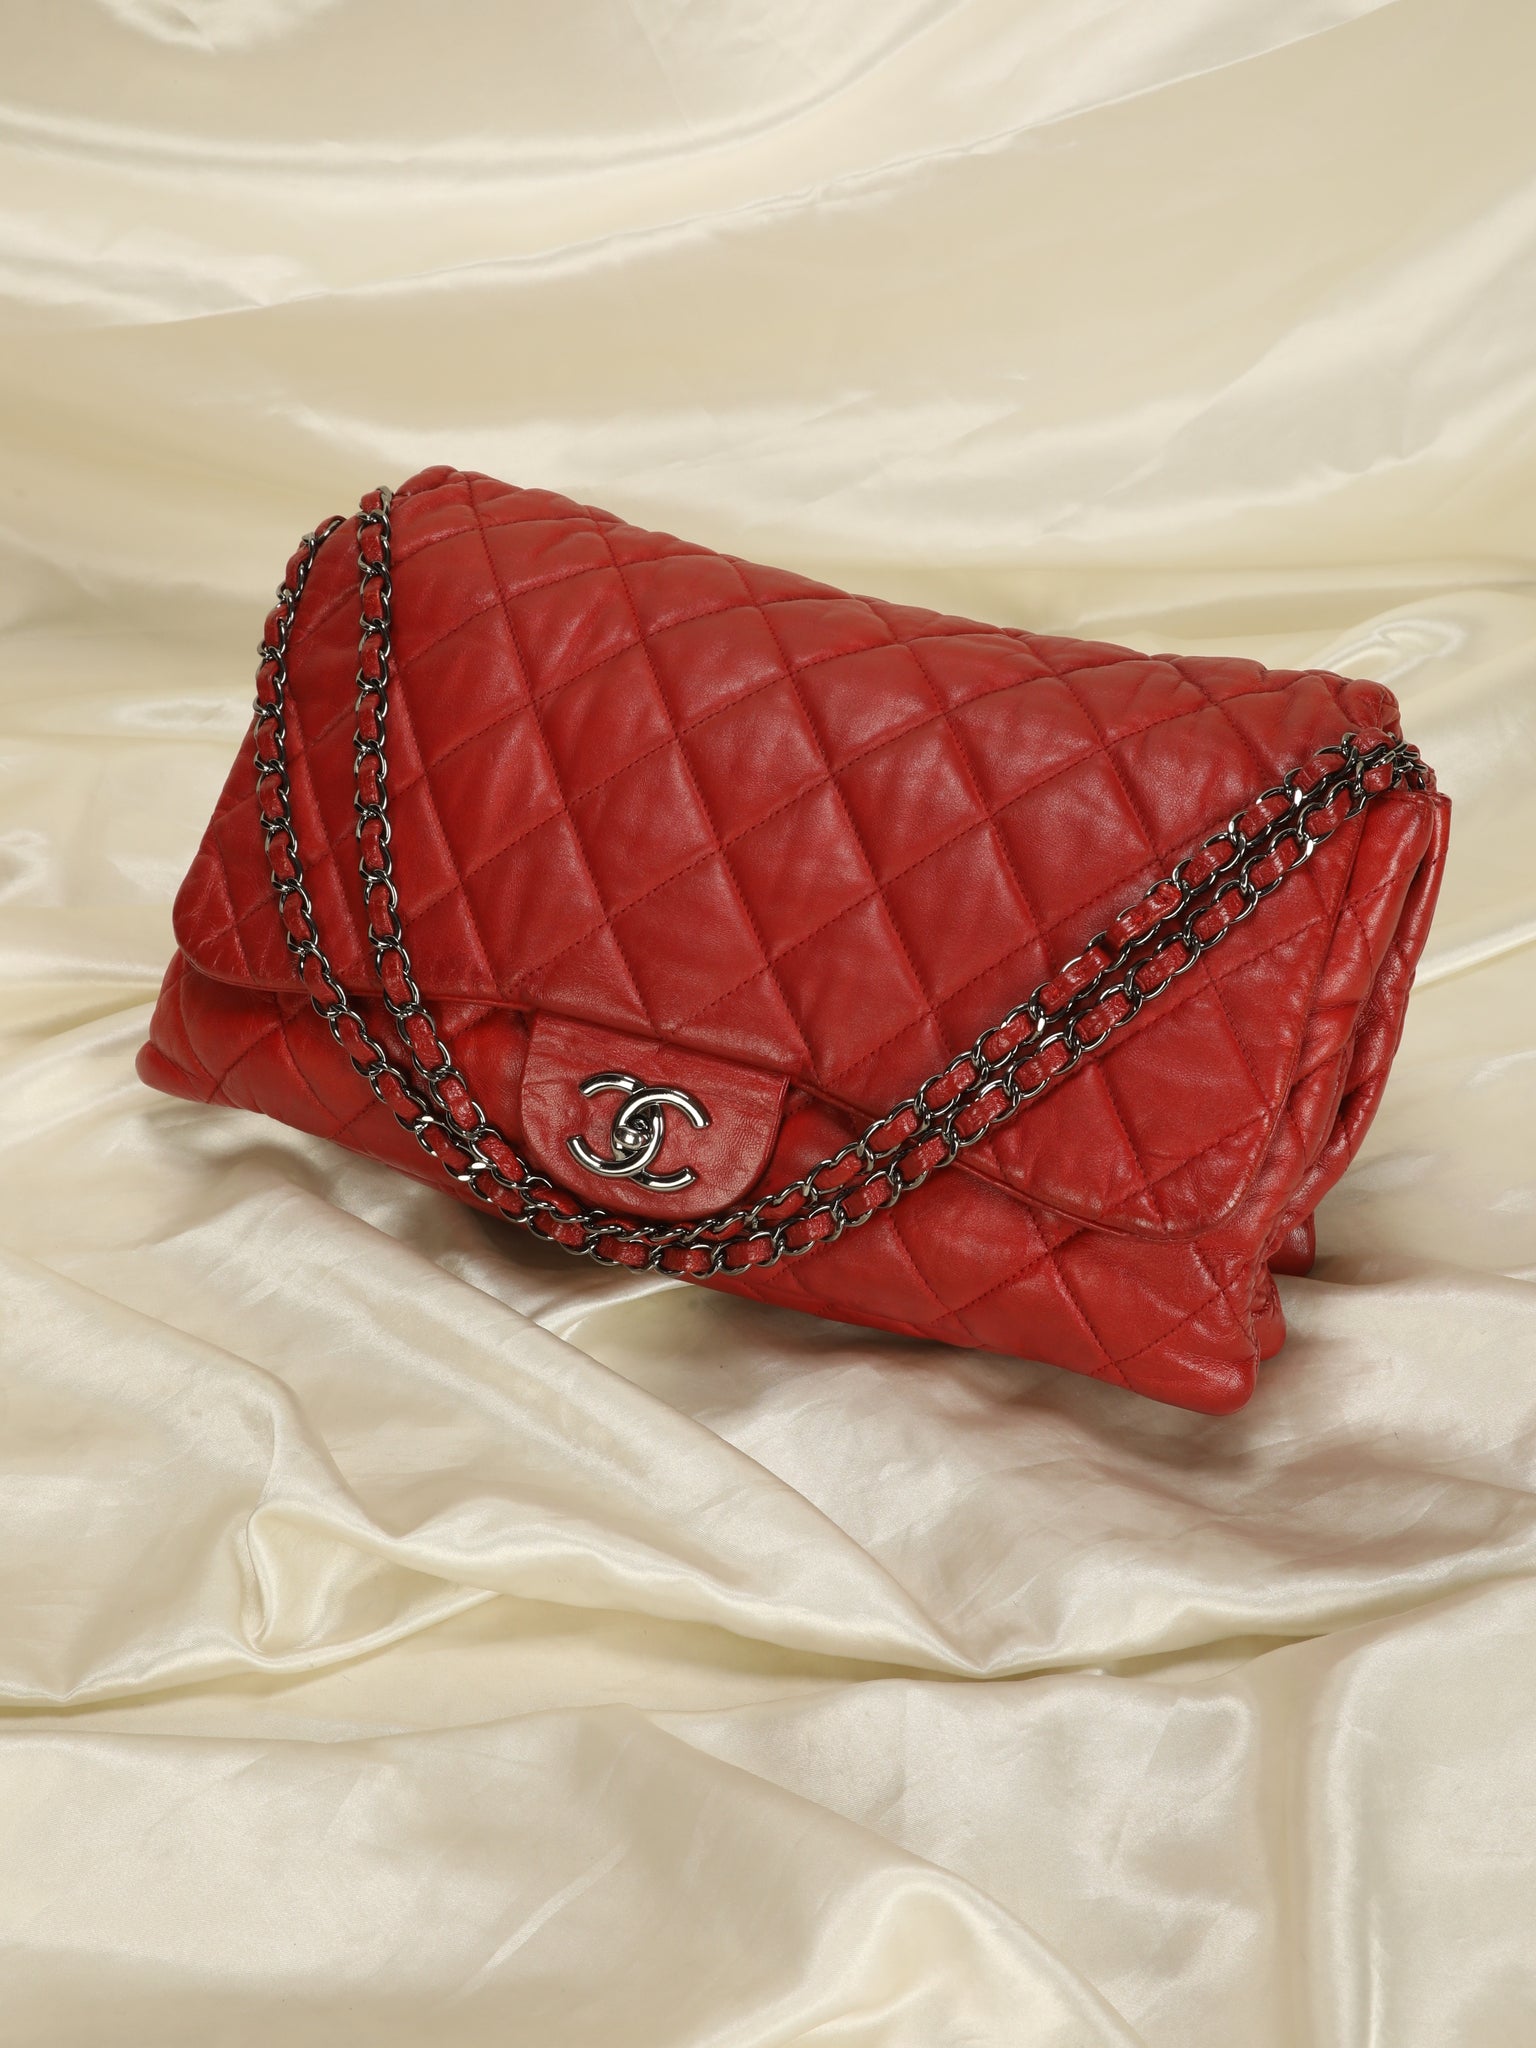 Chanel Lambskin Maxi Bag